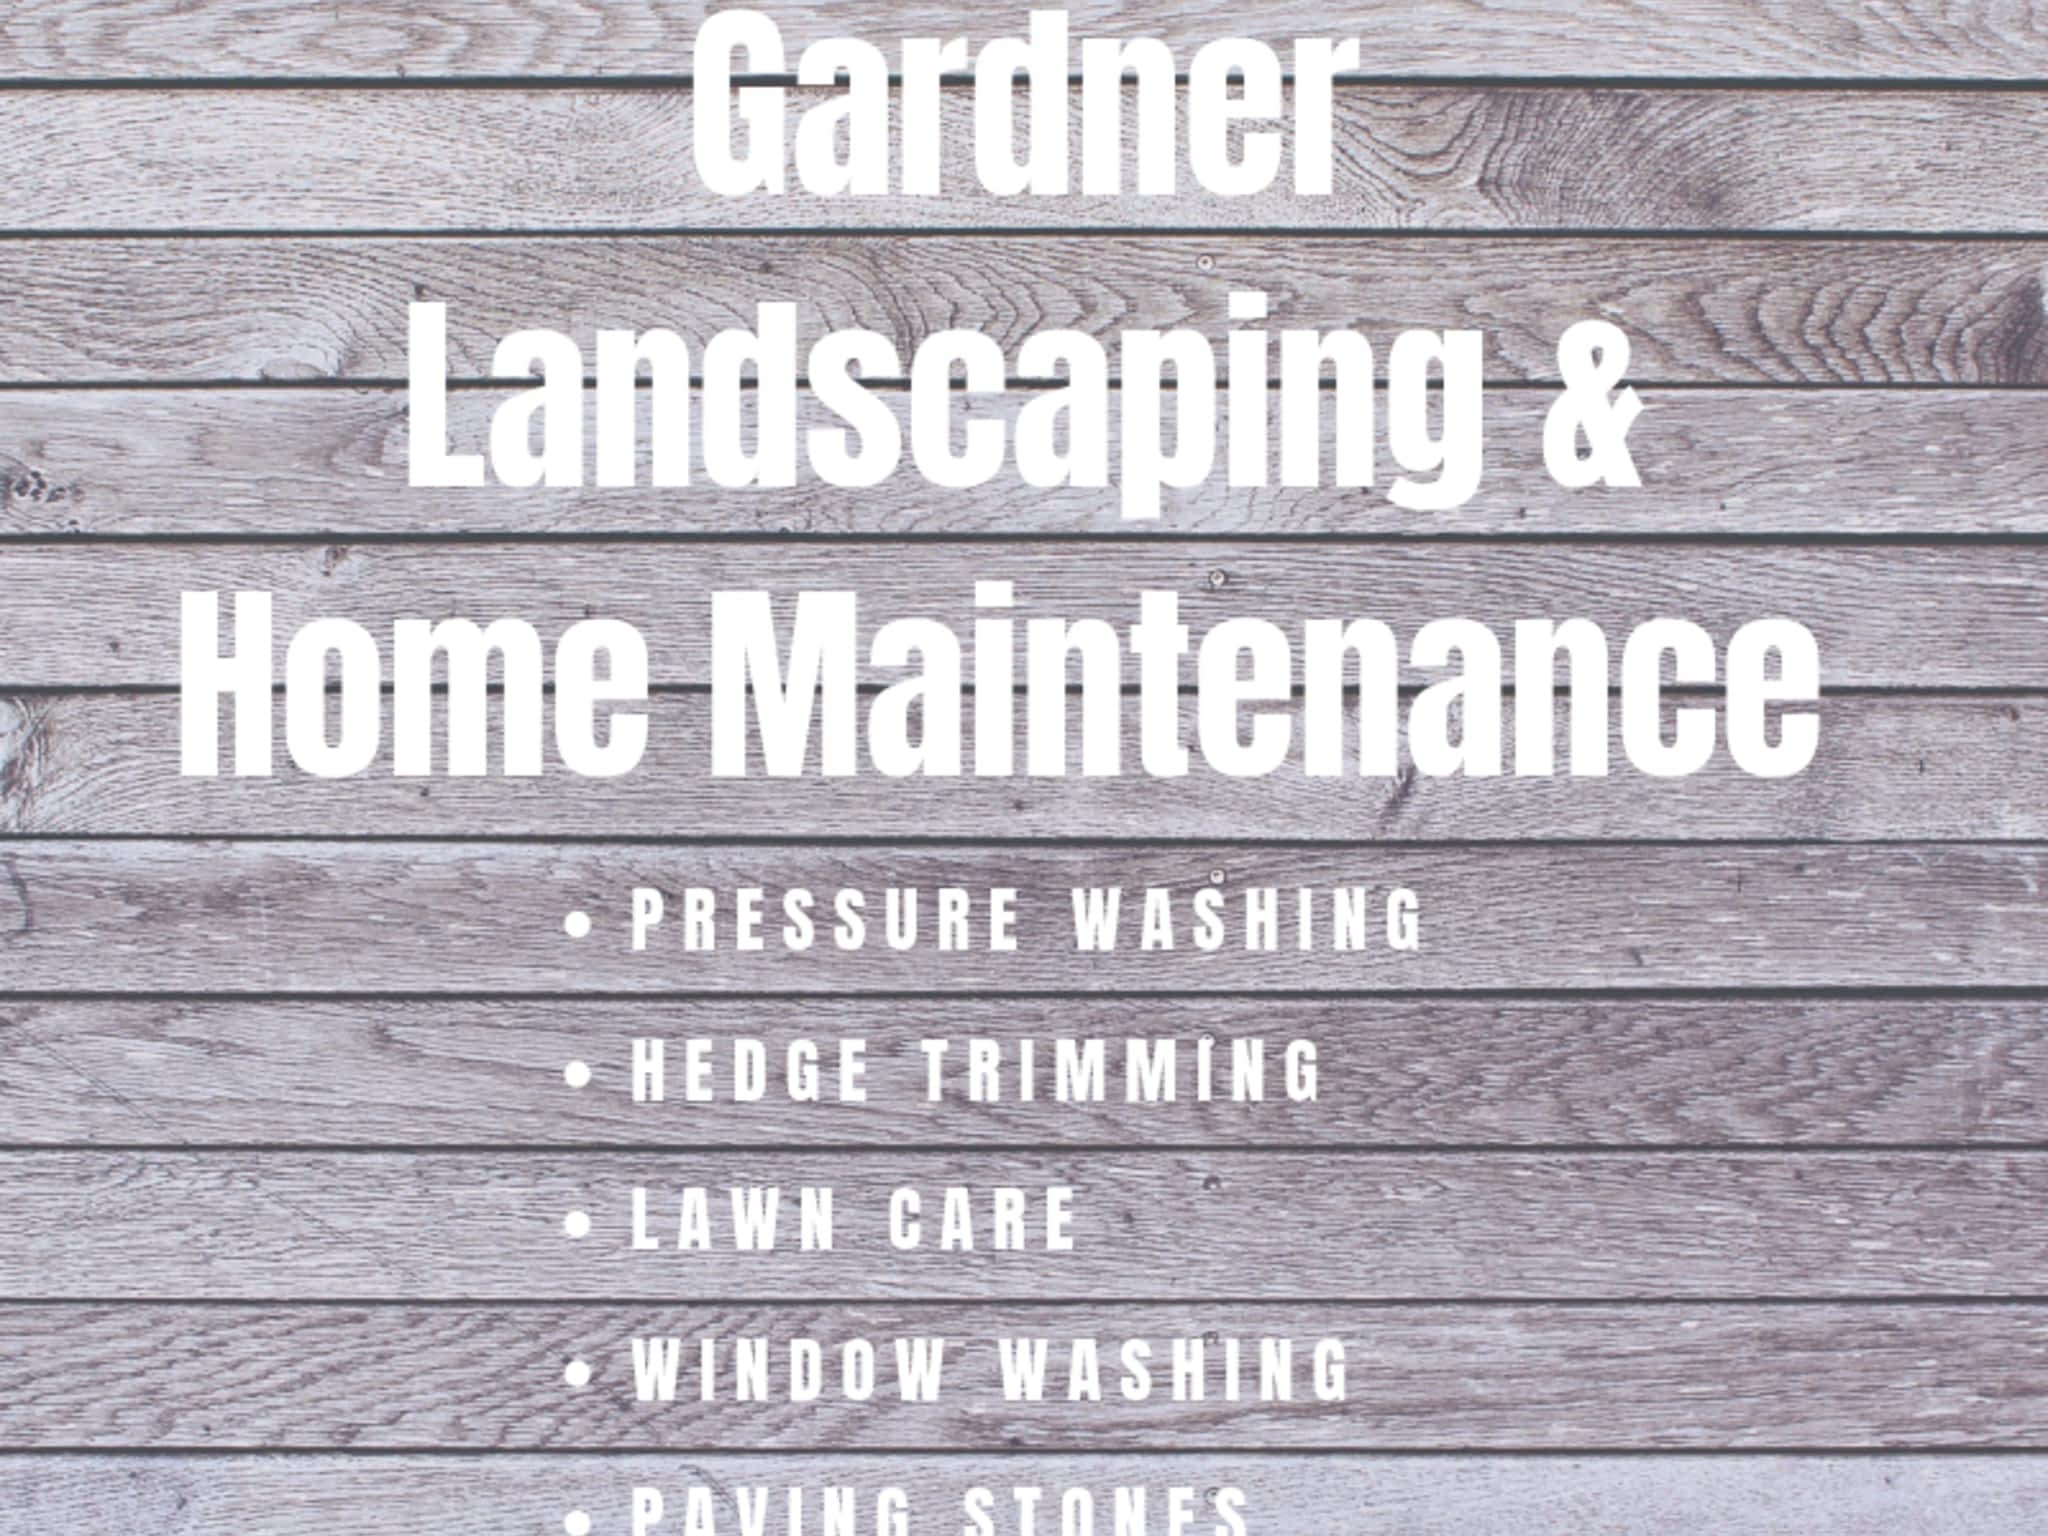 photo Gardner Landscaping & Home Maintenance